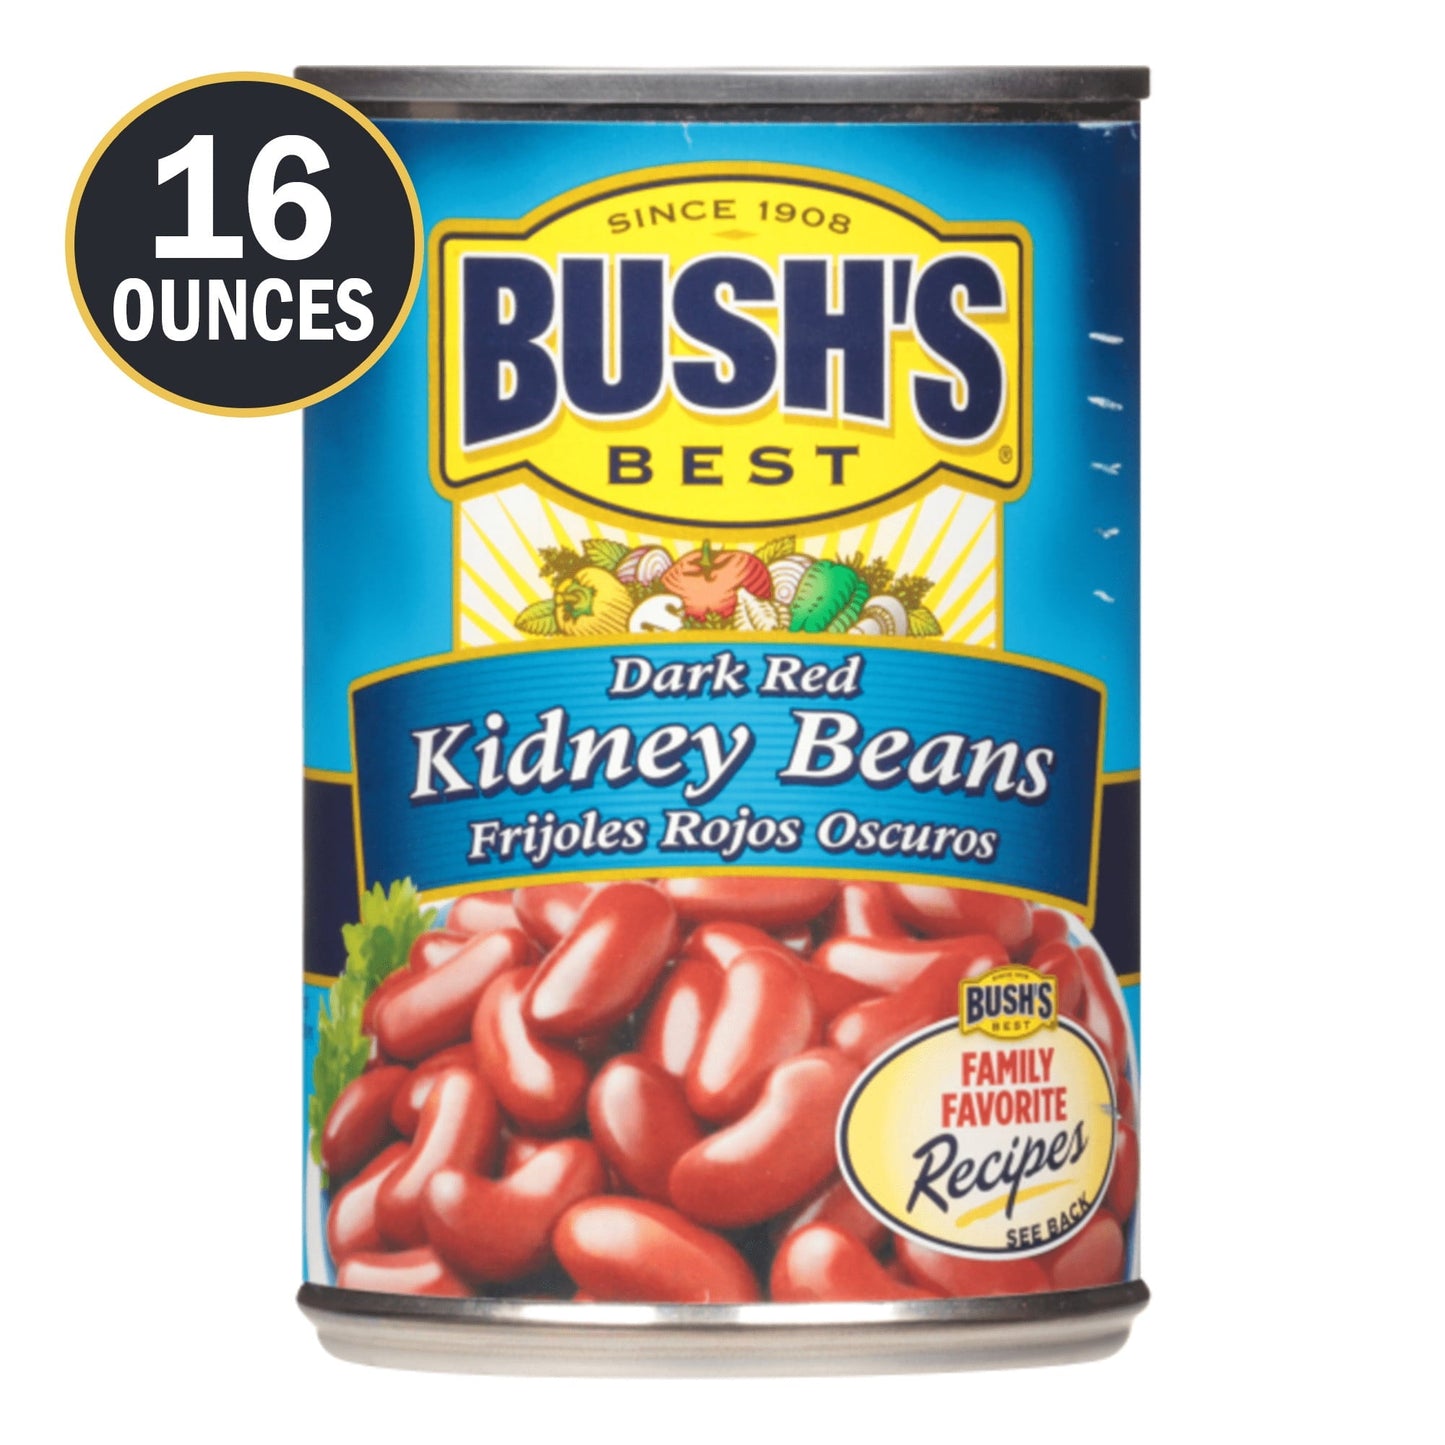 Bush's Dark Red Kidney Beans, Canned Dark Red Kidney Beans, 16 oz Can